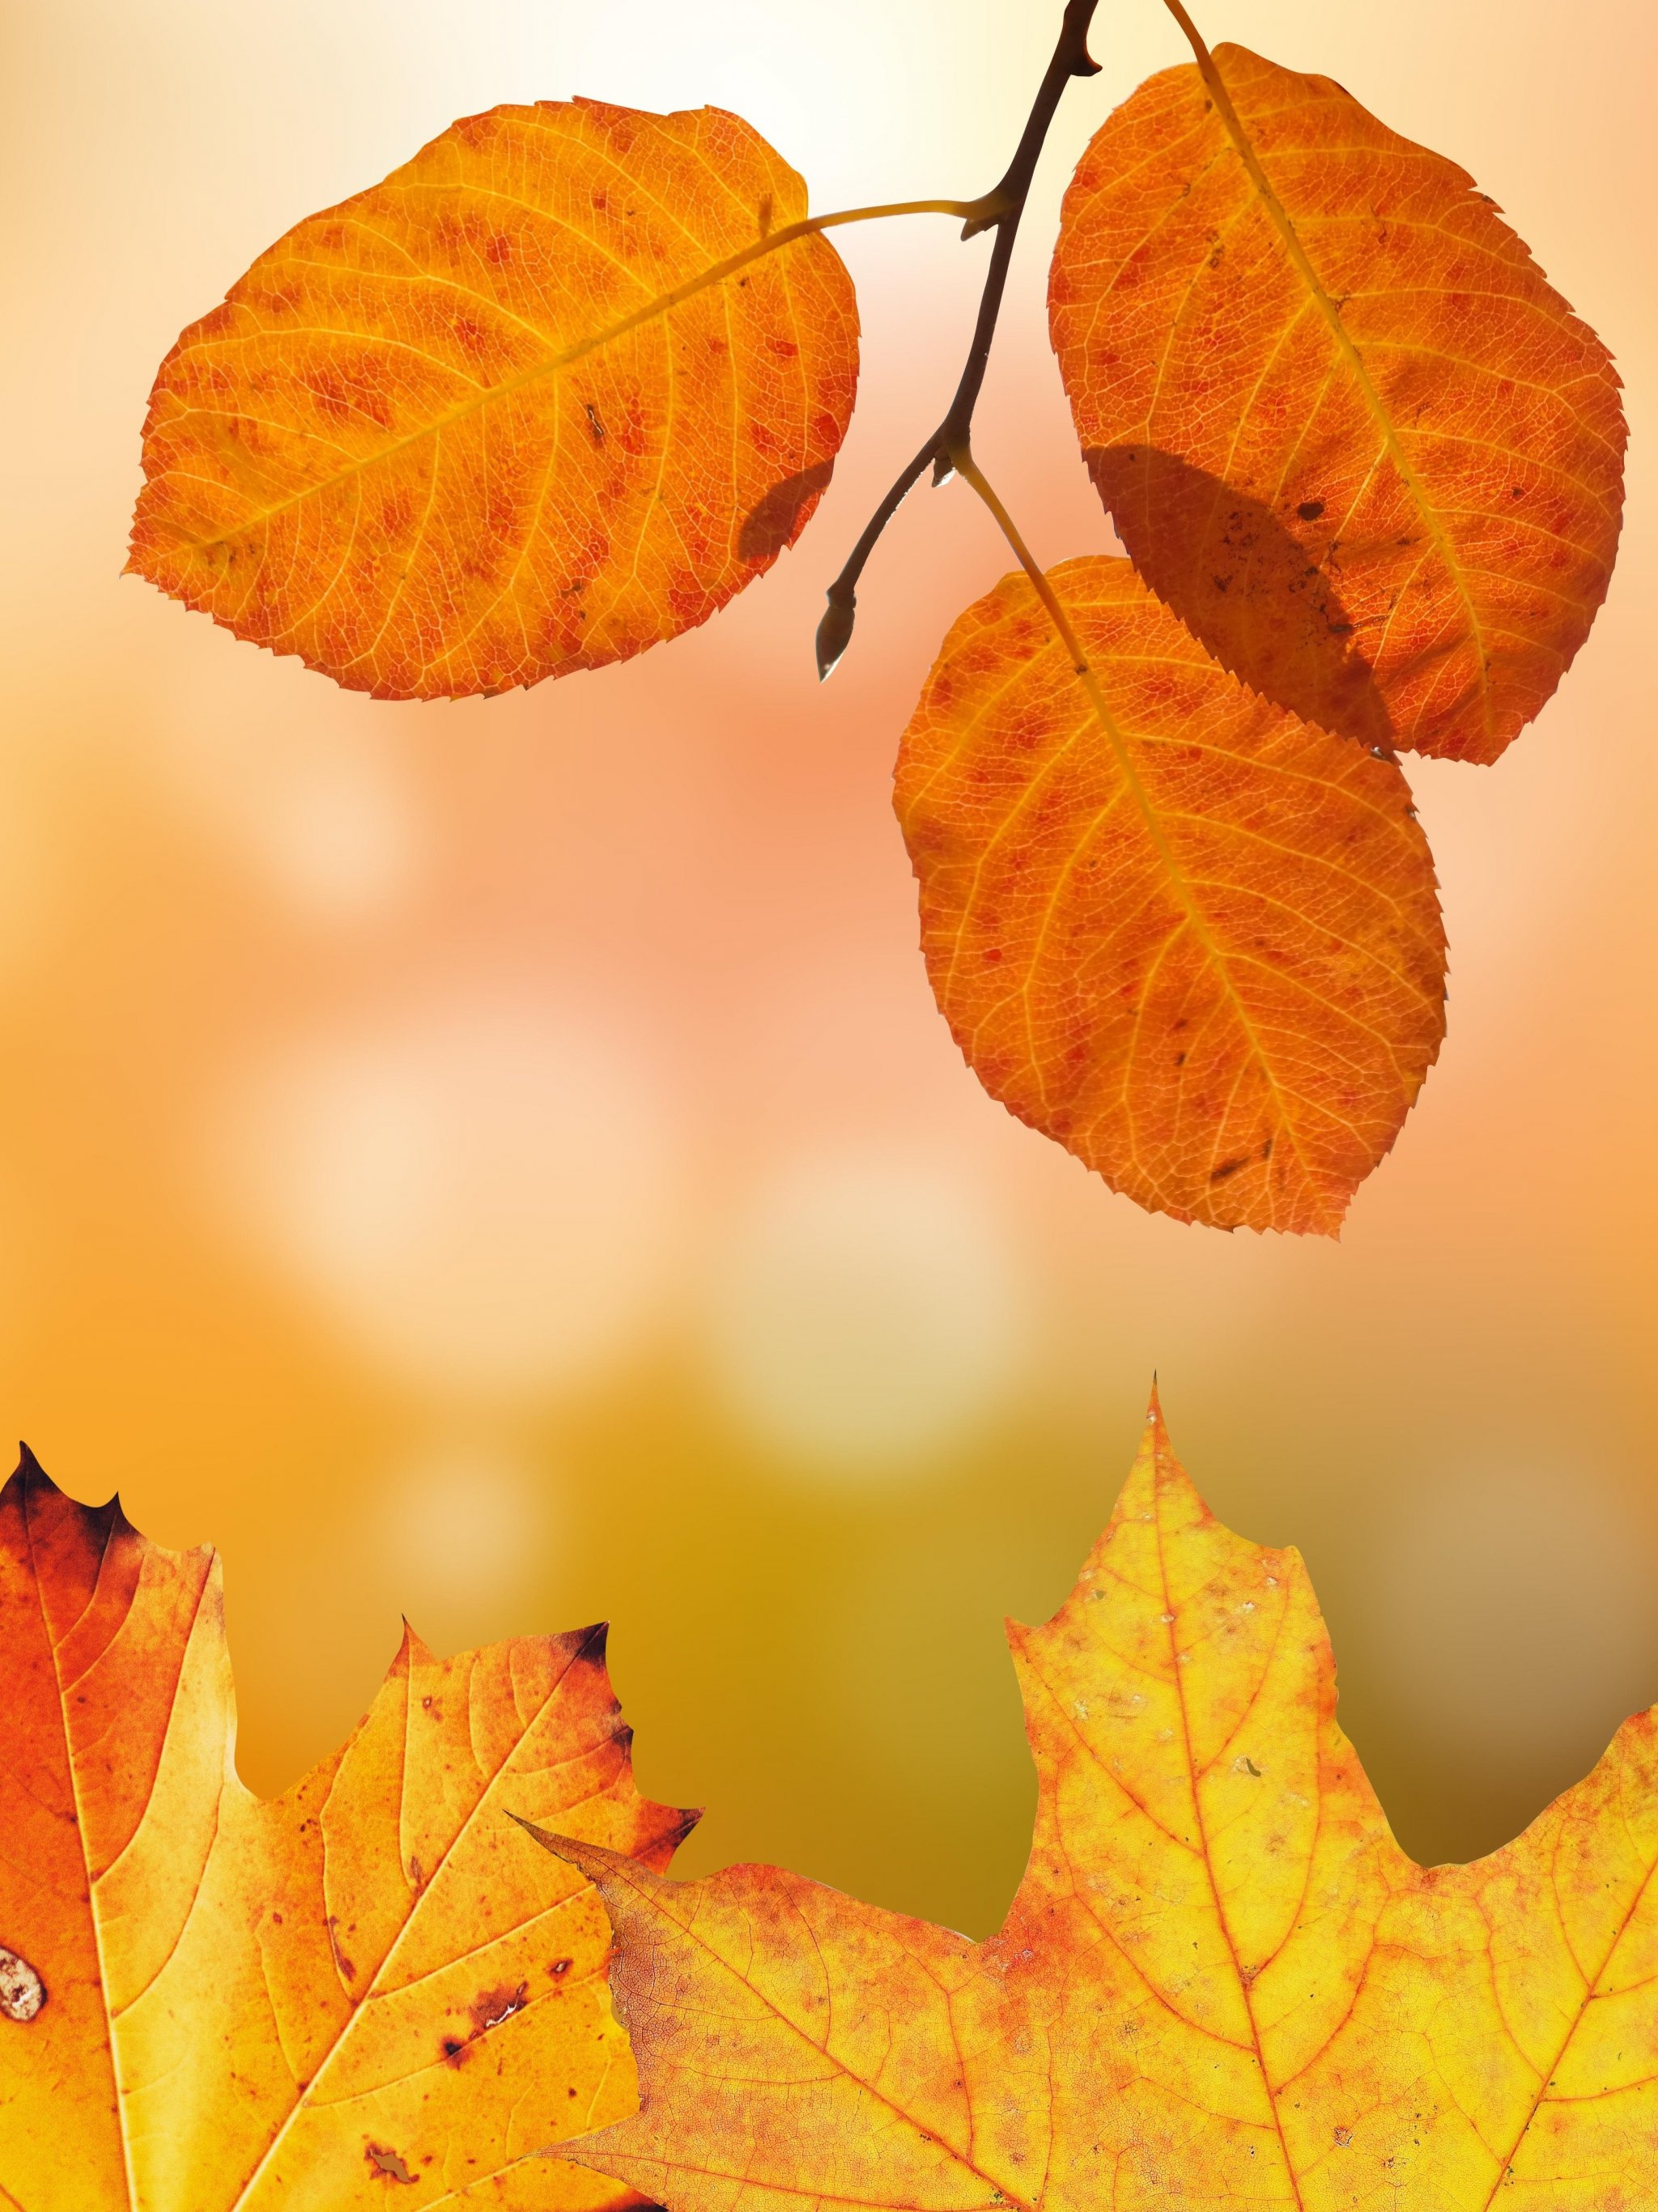 Best Autumn iPhone HD Wallpapers  iLikeWallpaper